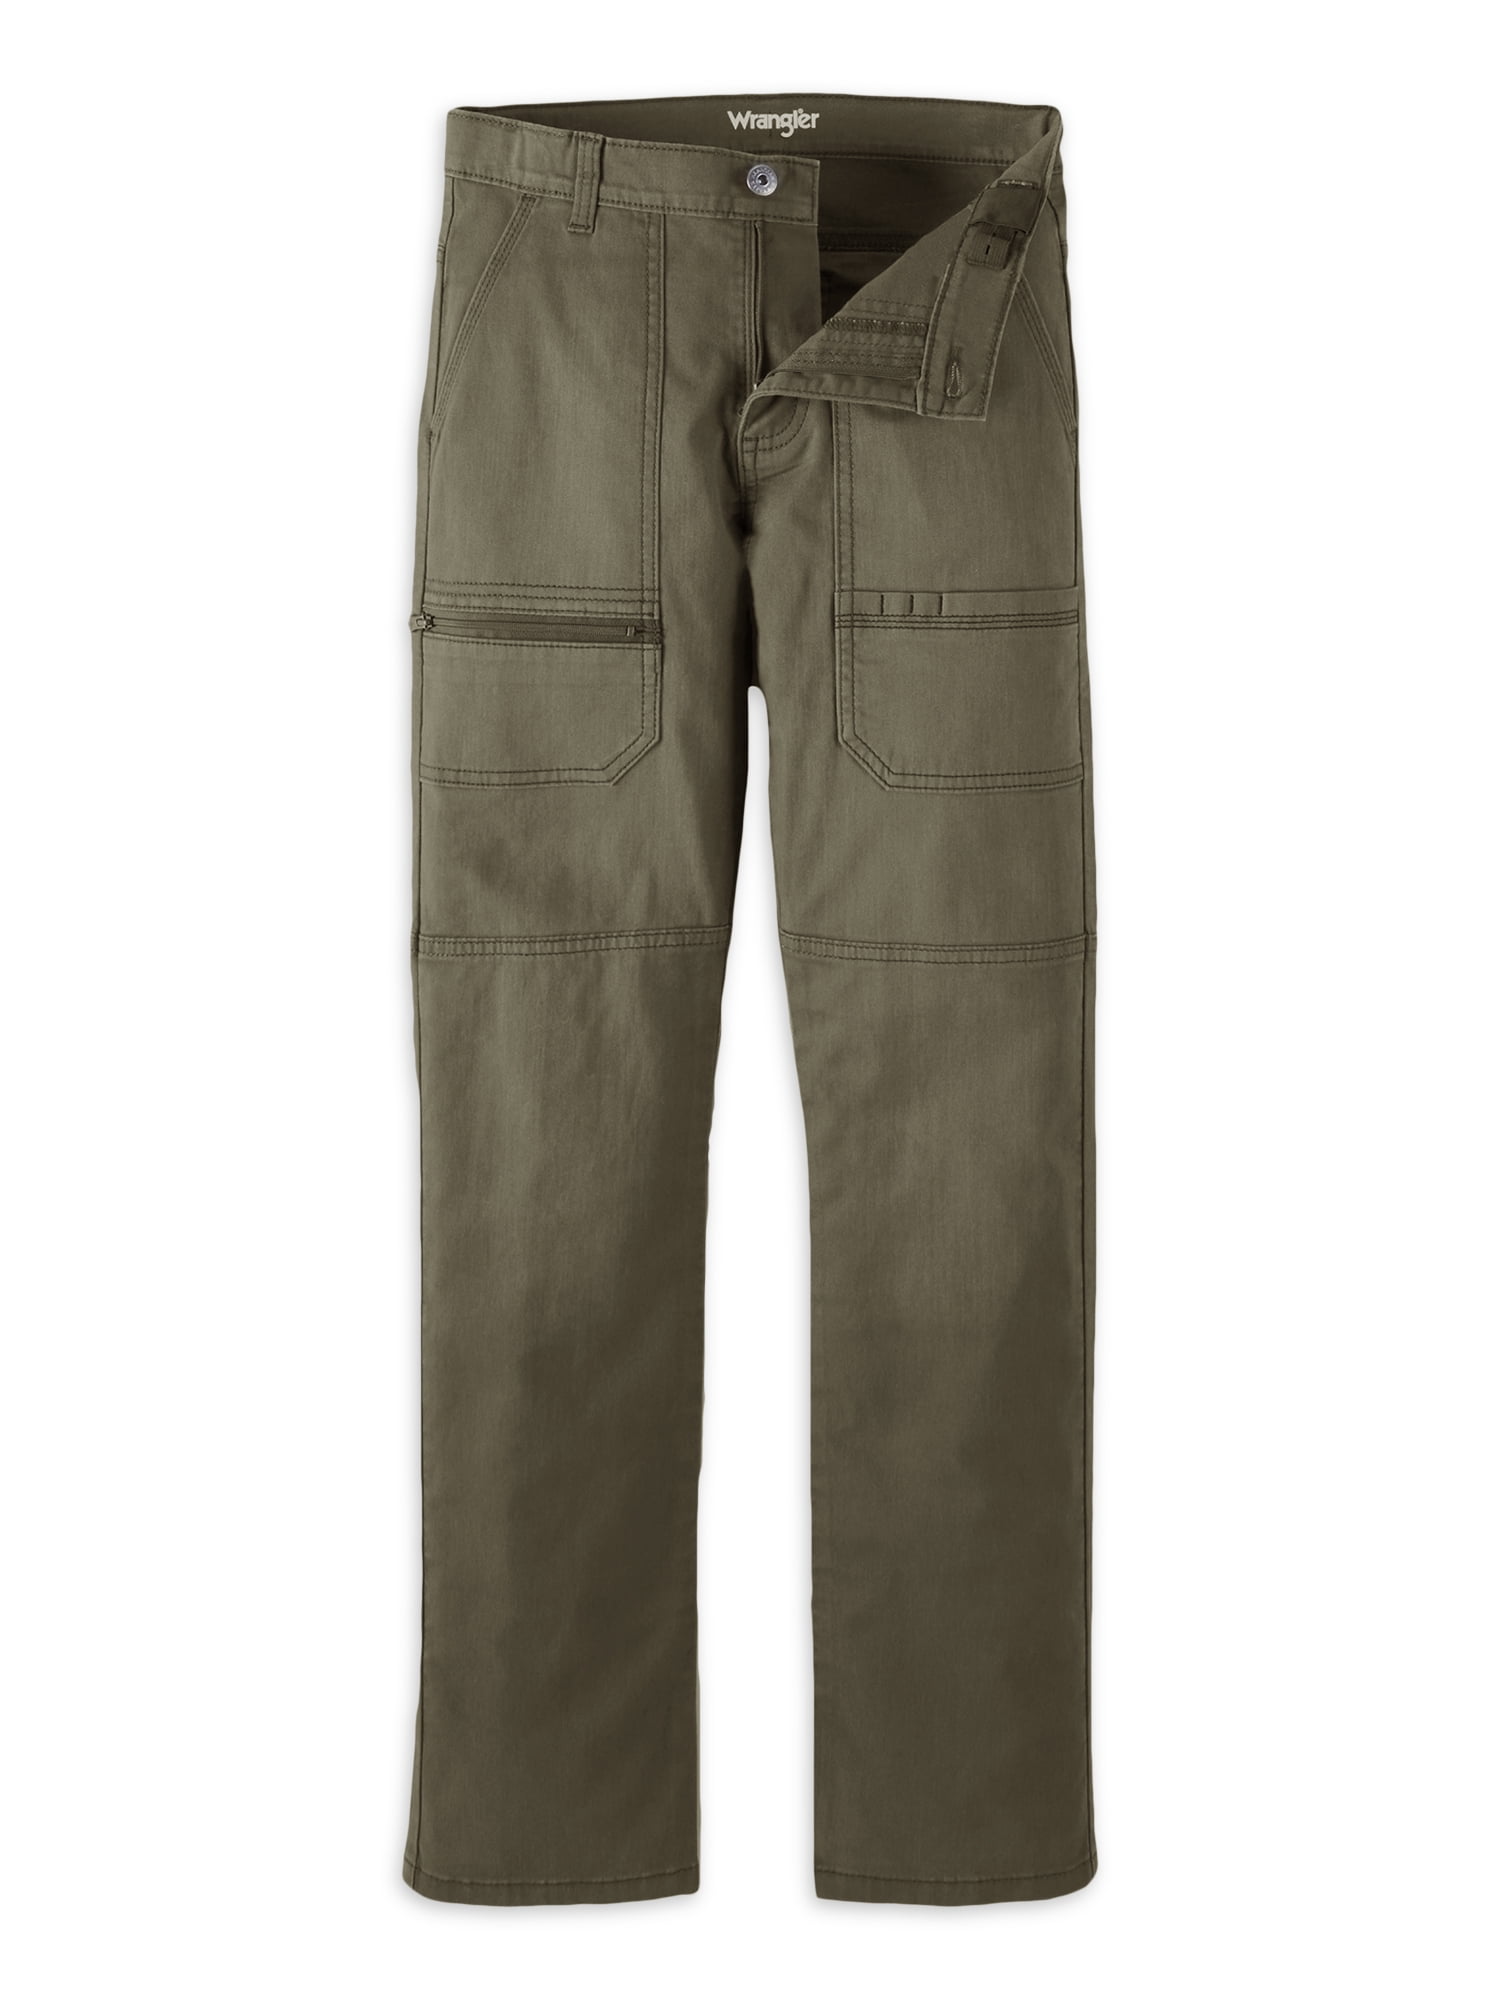 Wrangler Boys Classic Cargo Jeans Size 12 Husky Adjustable Waistband Khaki Pants 